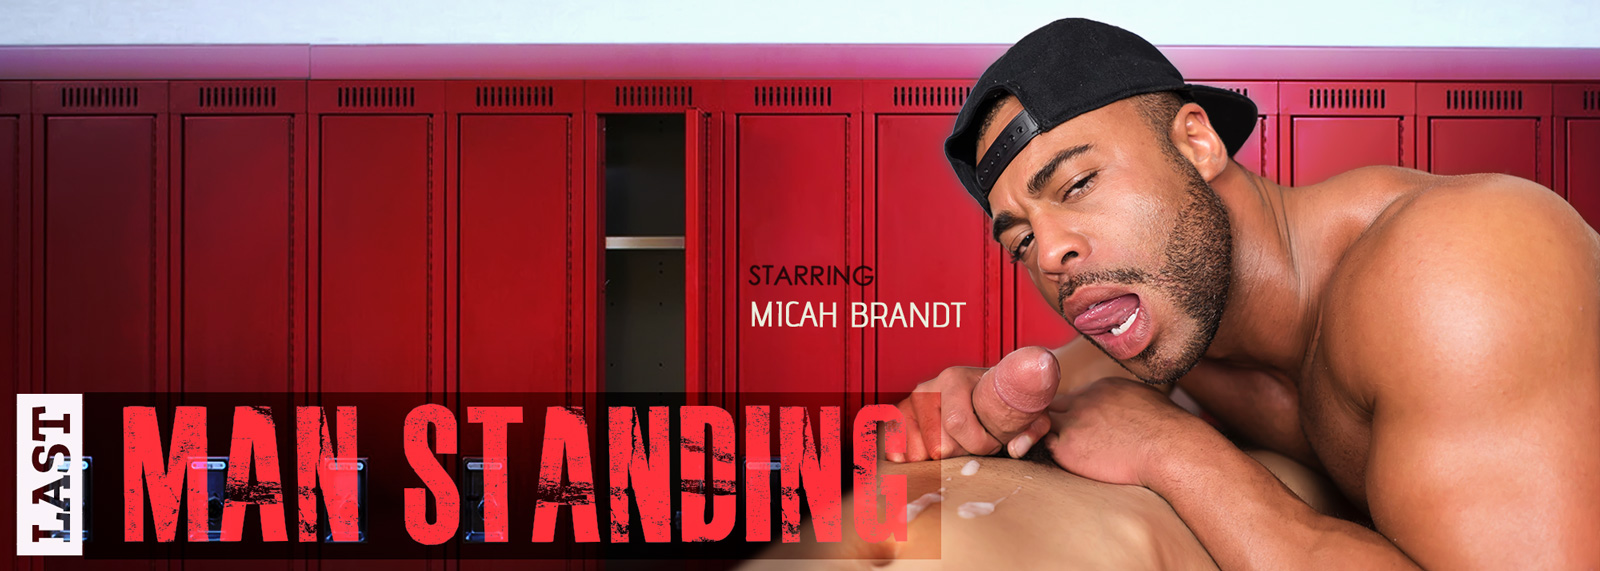 Last Man Standing - VR Porn Video, Starring Micah Brandt VR